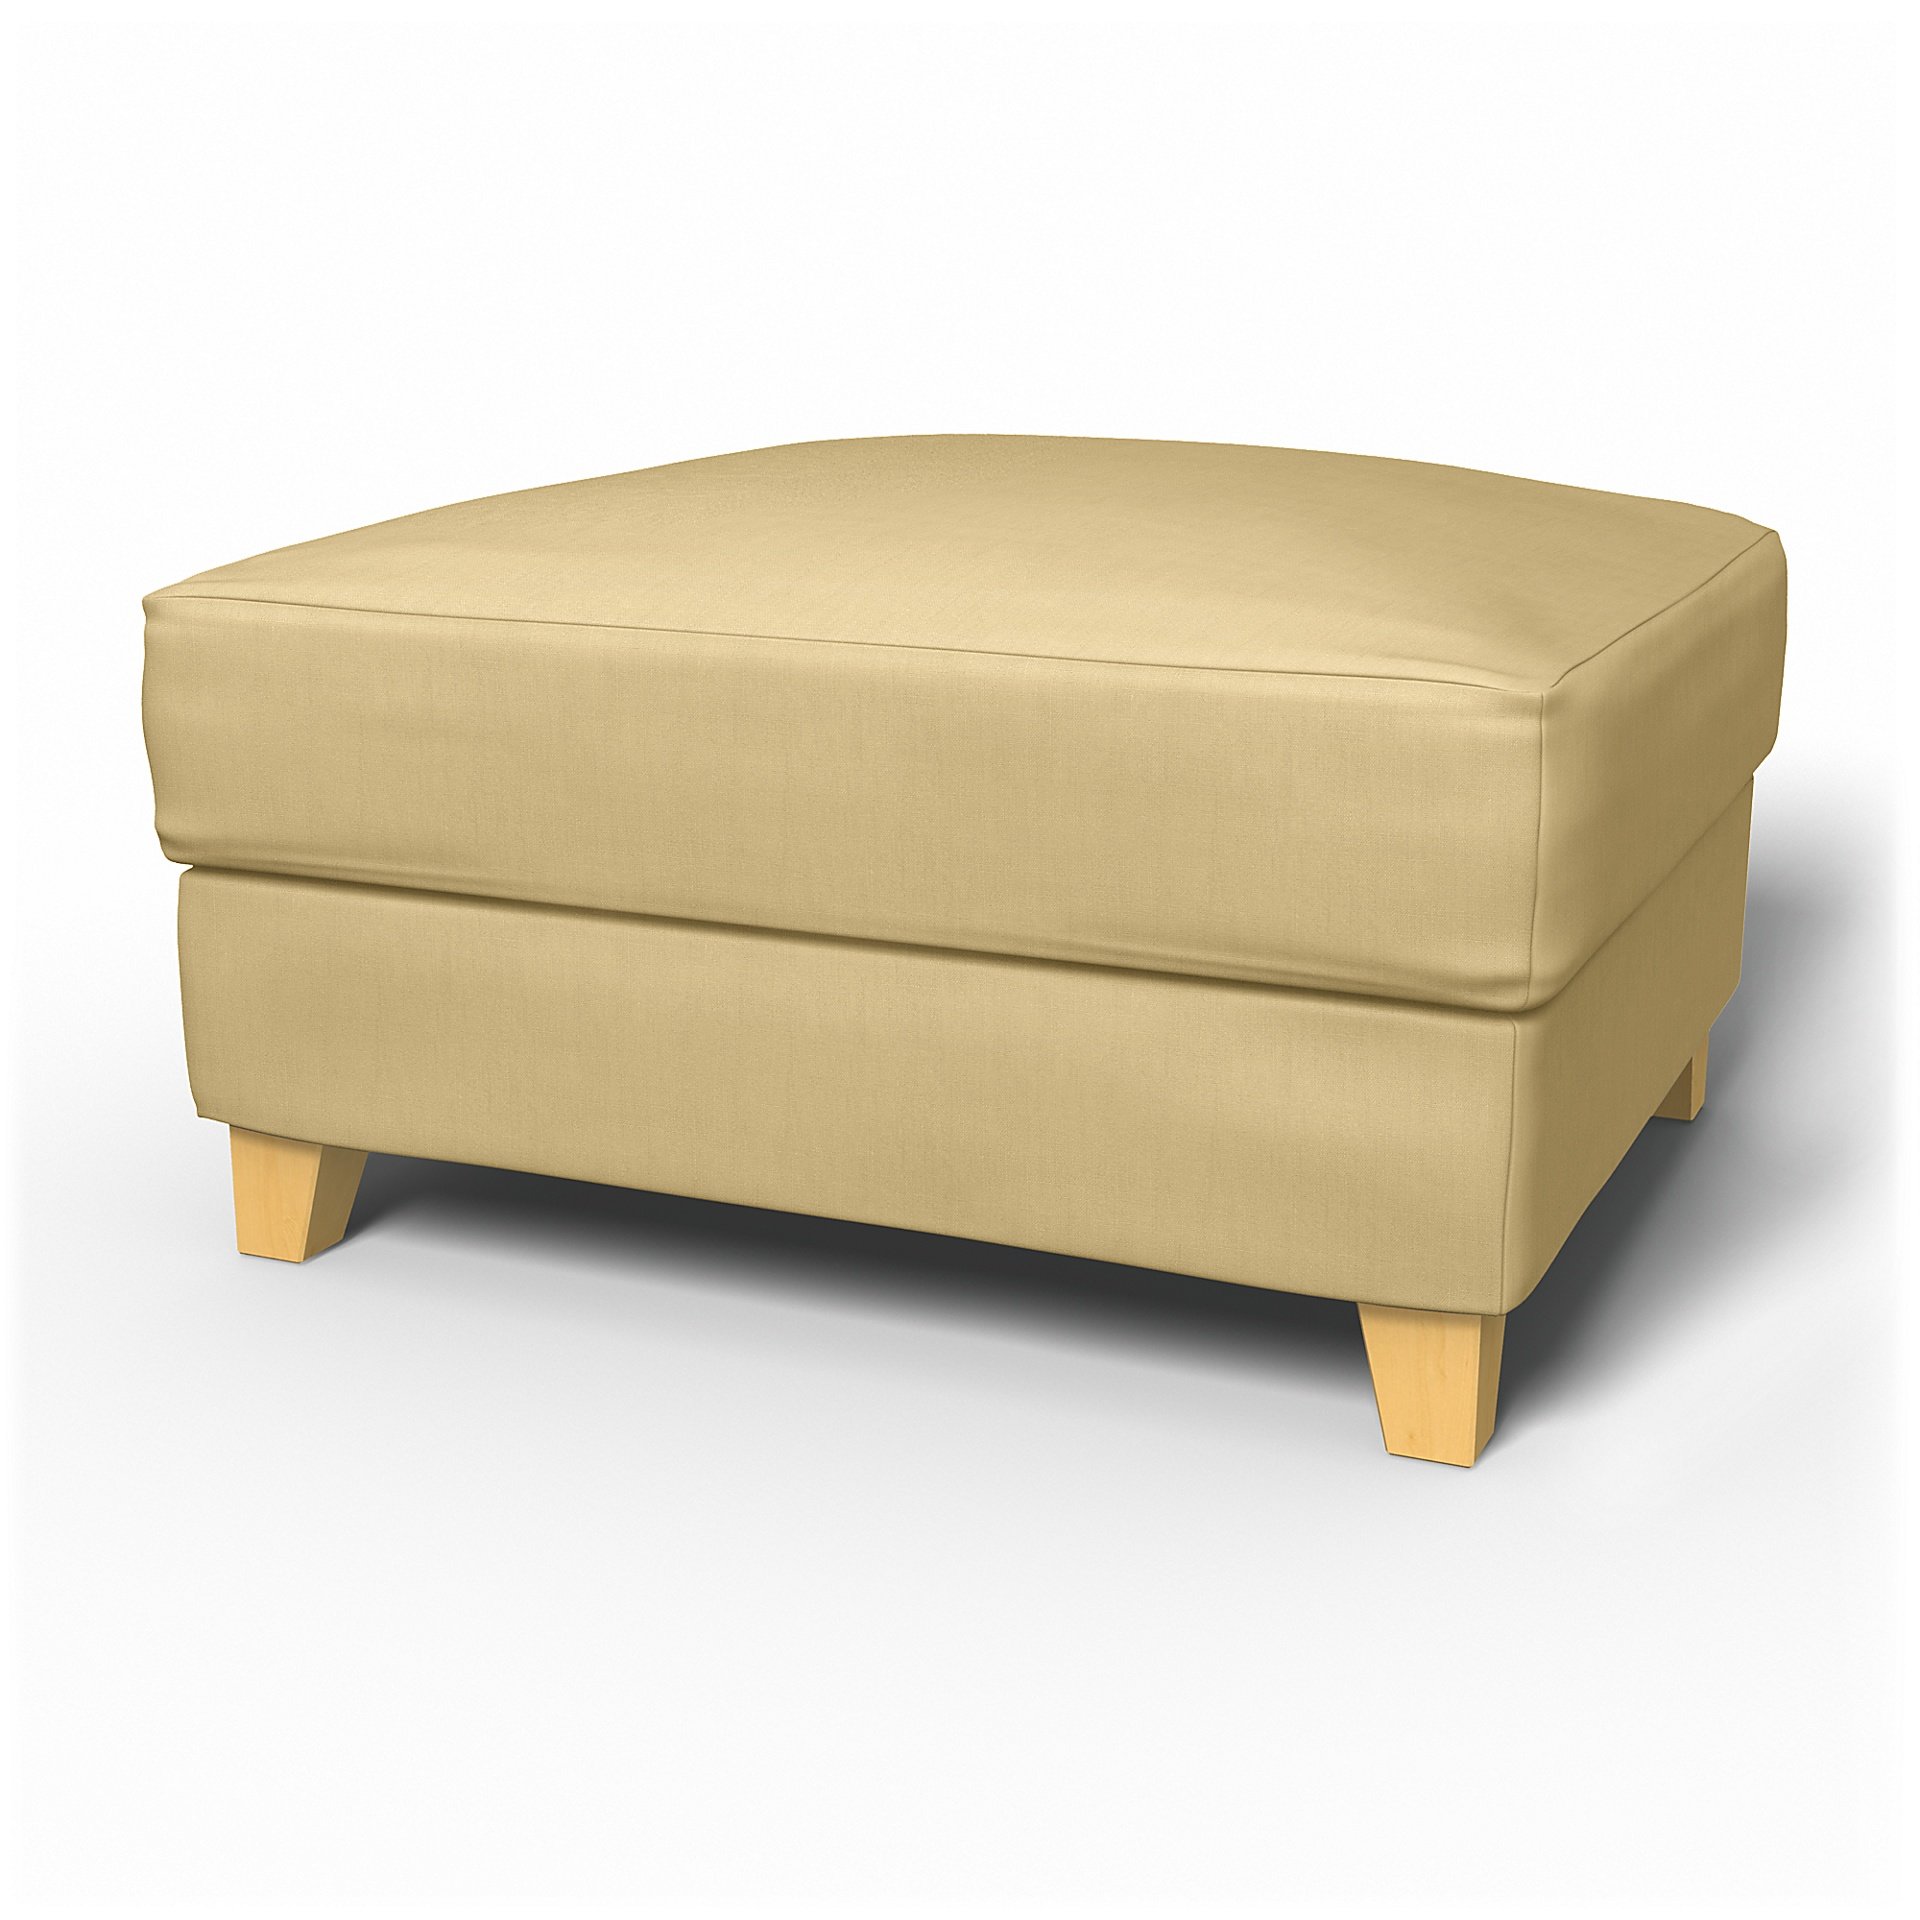 IKEA - Backa Footstool Cover, Straw Yellow, Linen - Bemz